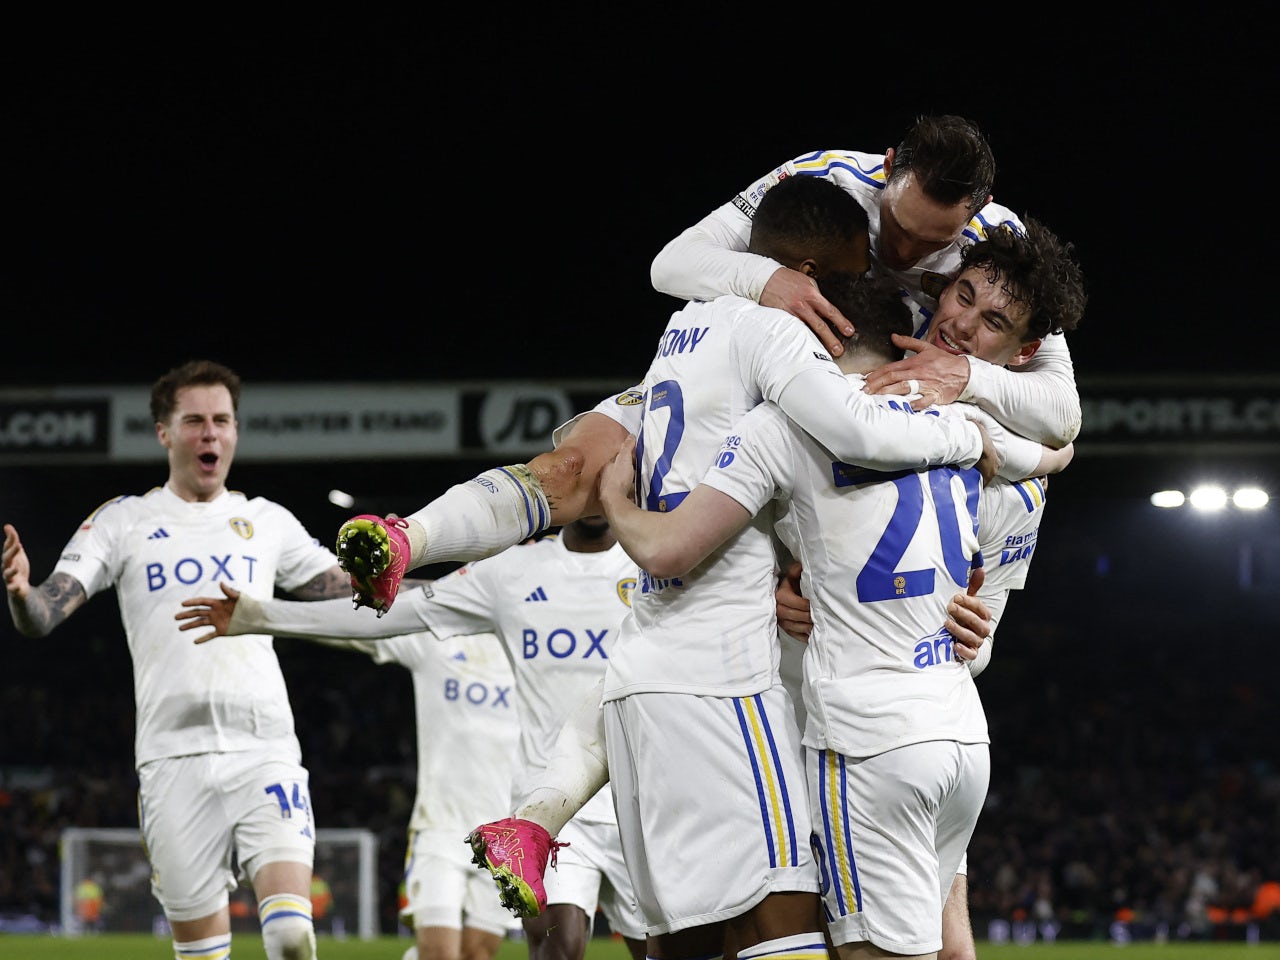 Daniel Farke, Enzo Maresca react as Leeds United stun Leicester City with late comeback